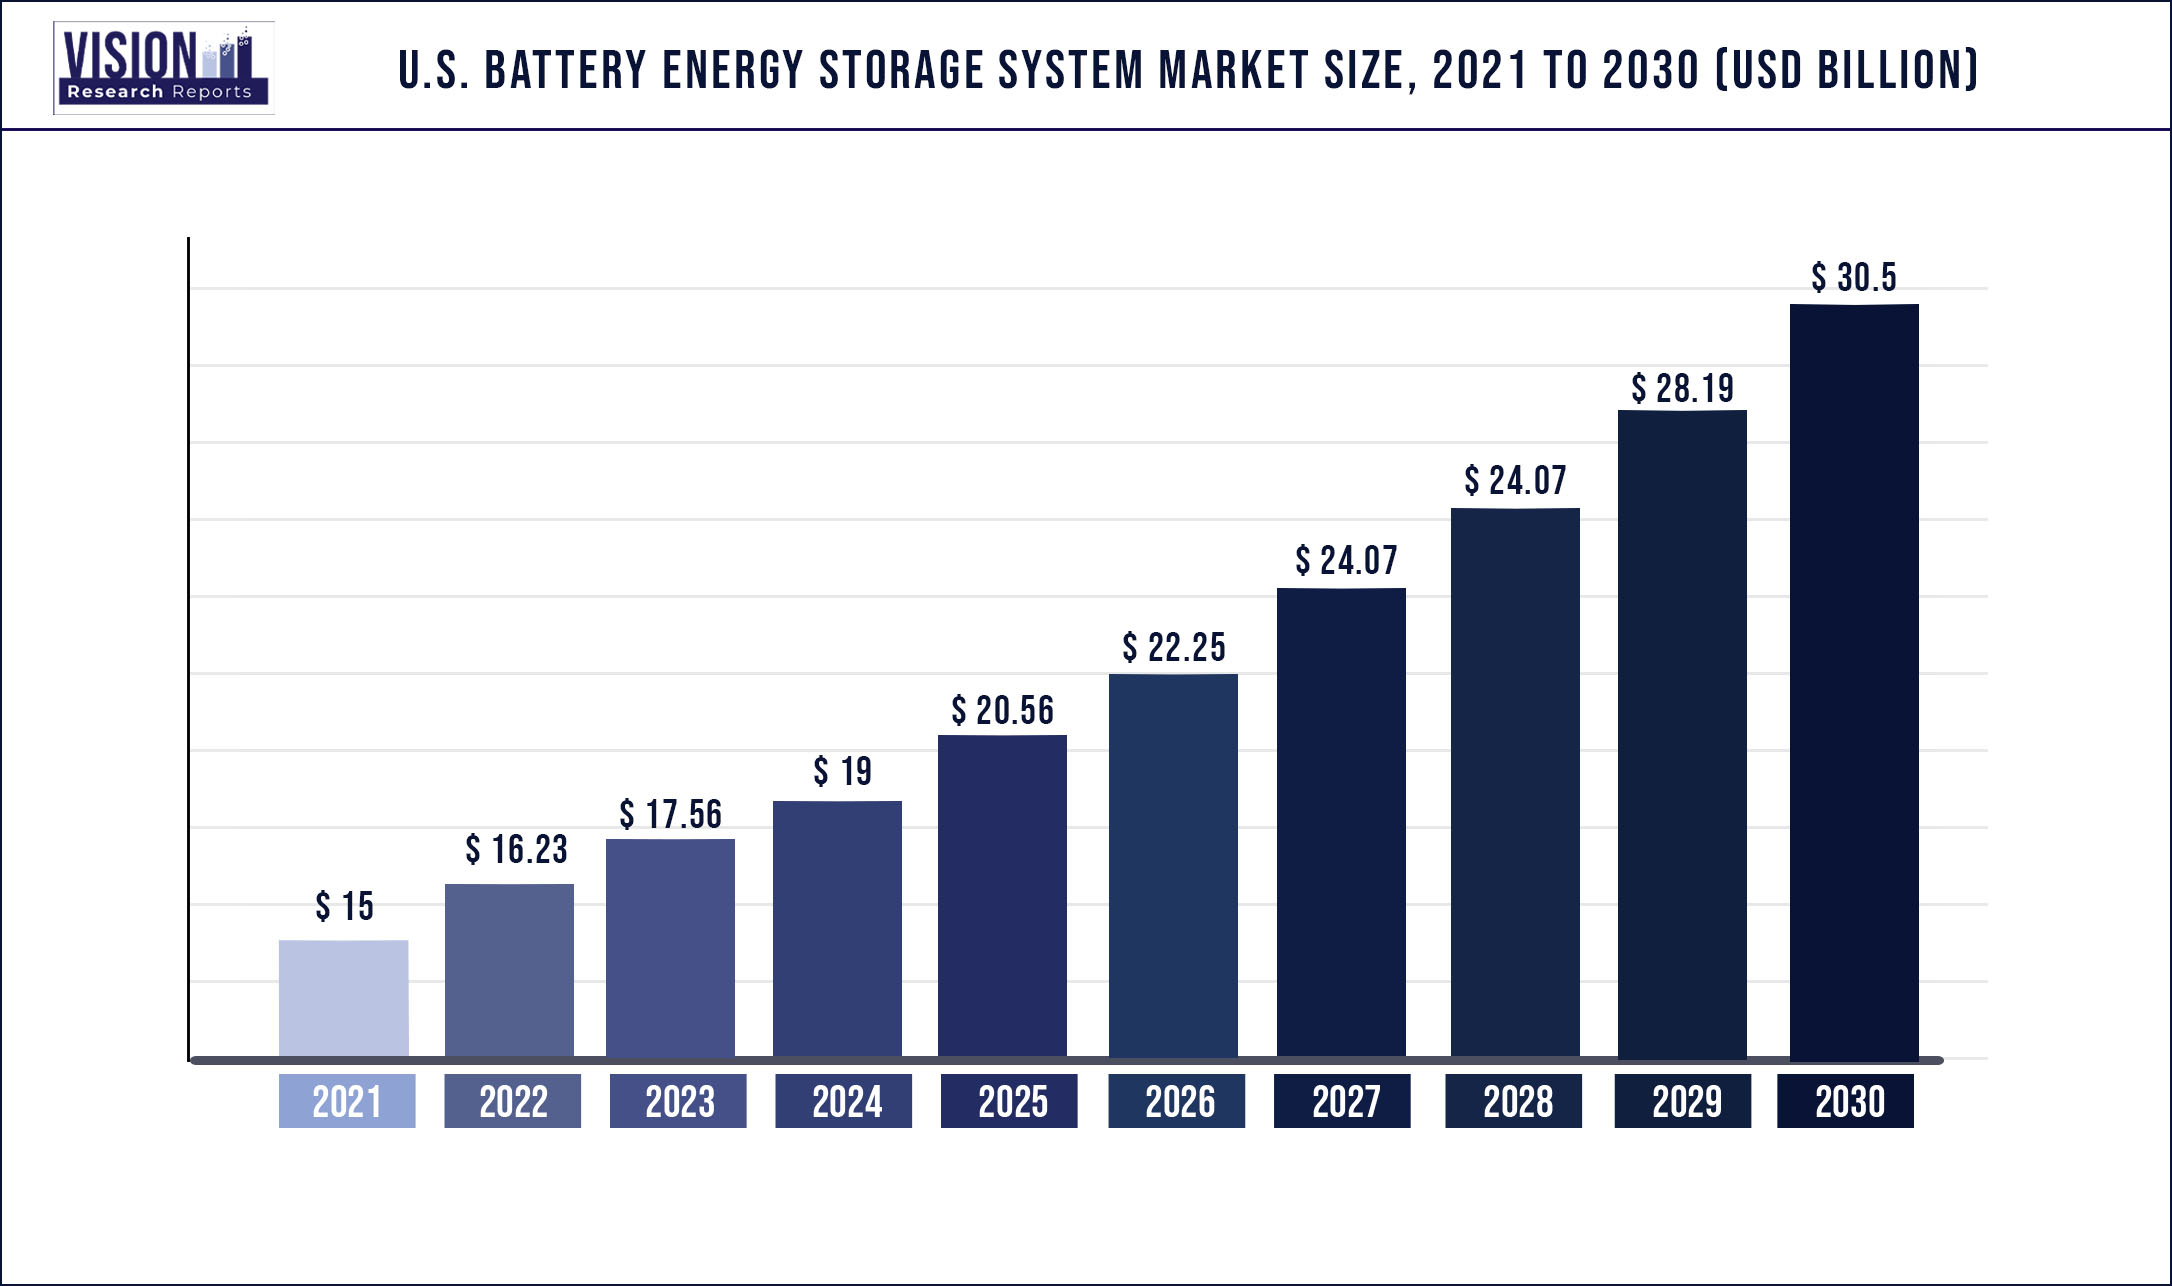 U.S. Battery Energy Storage System Market Size 2021 to 2030